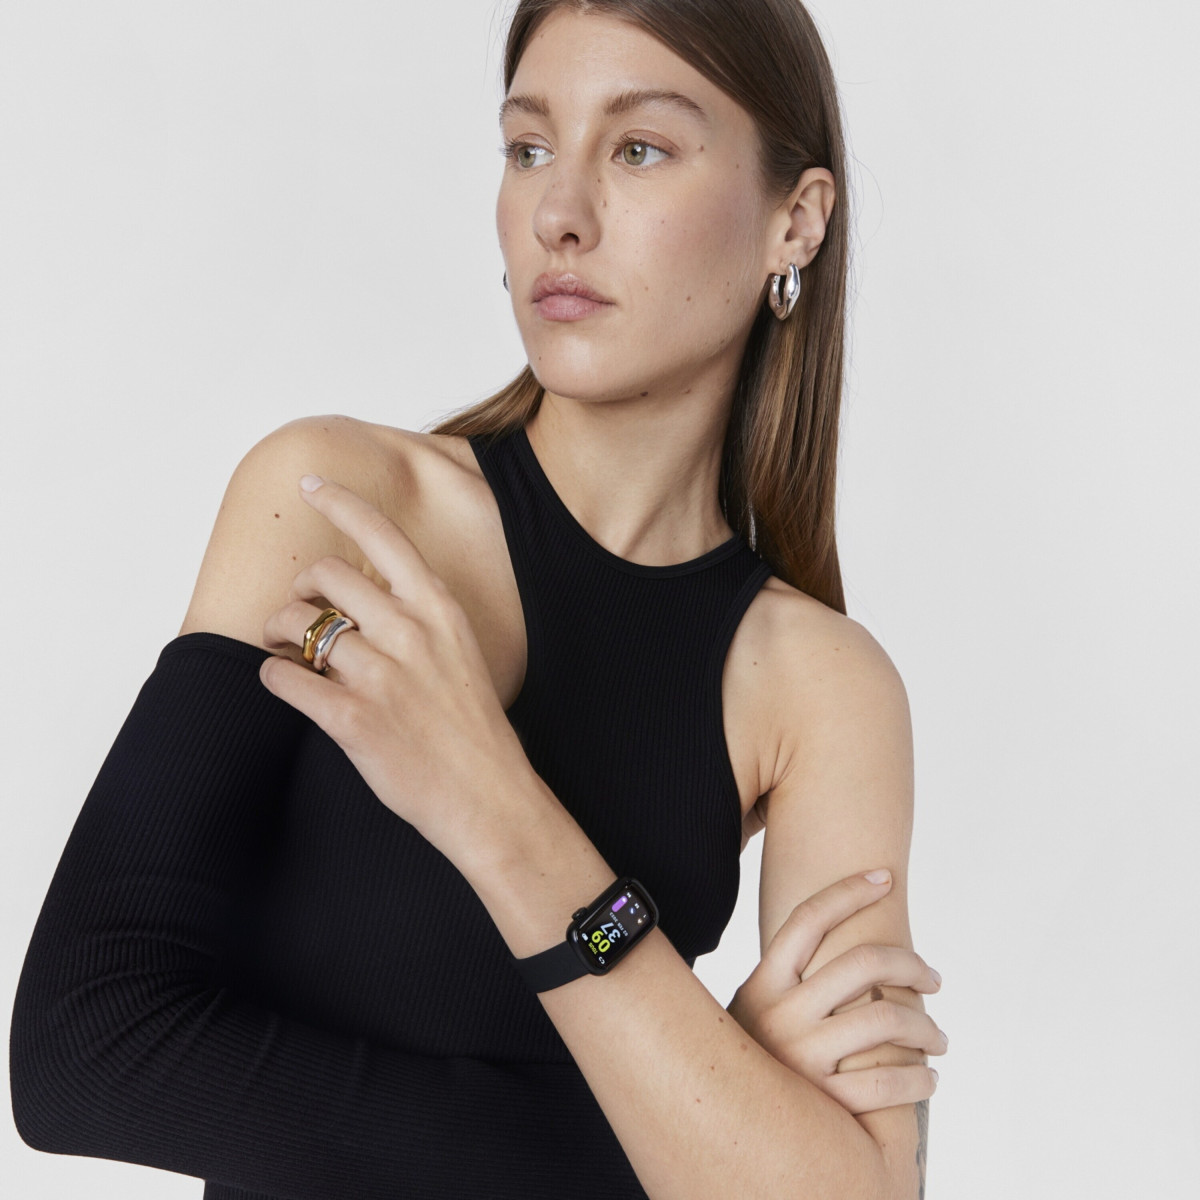 Reloj Tous T-Band smartwatch con correa de nylon y correa de silicona negra.